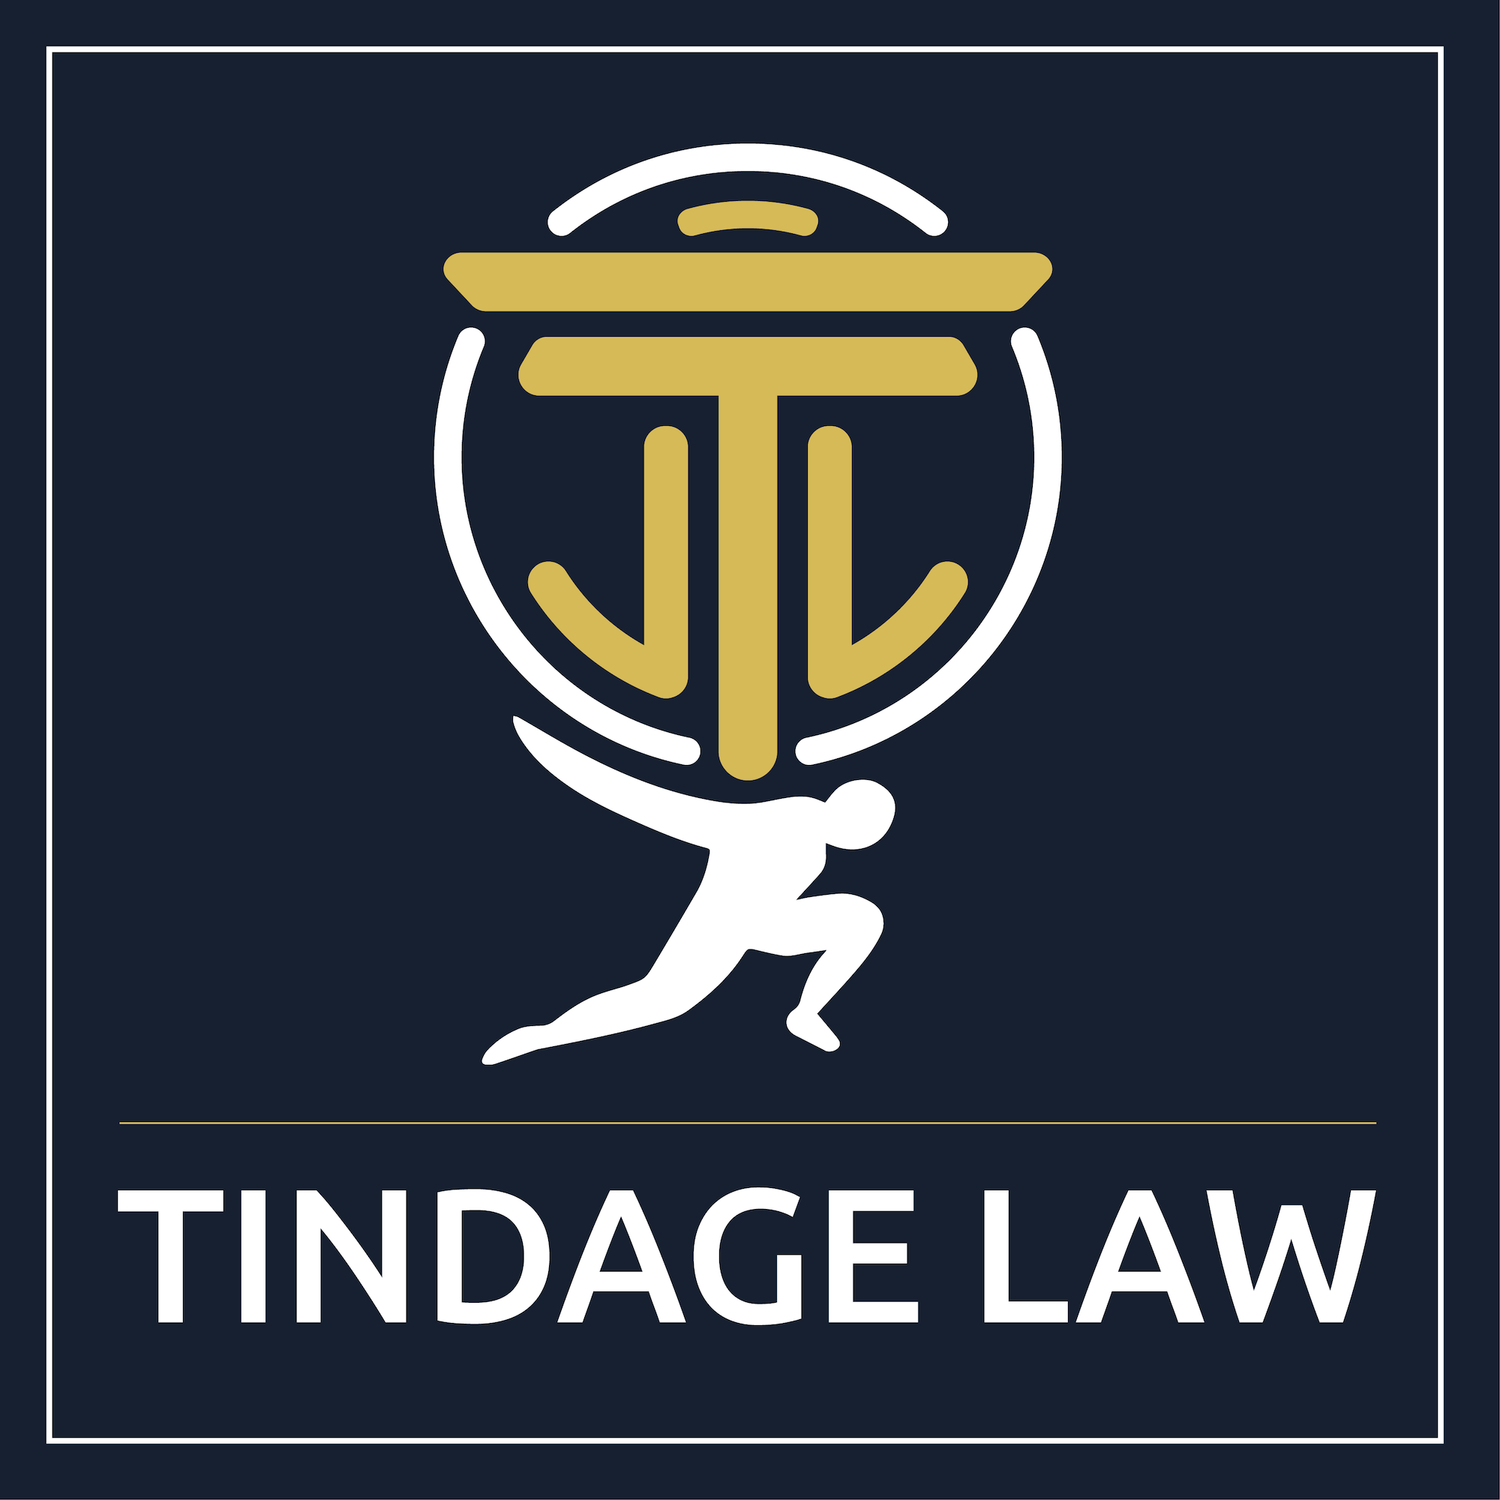 Tindage Law